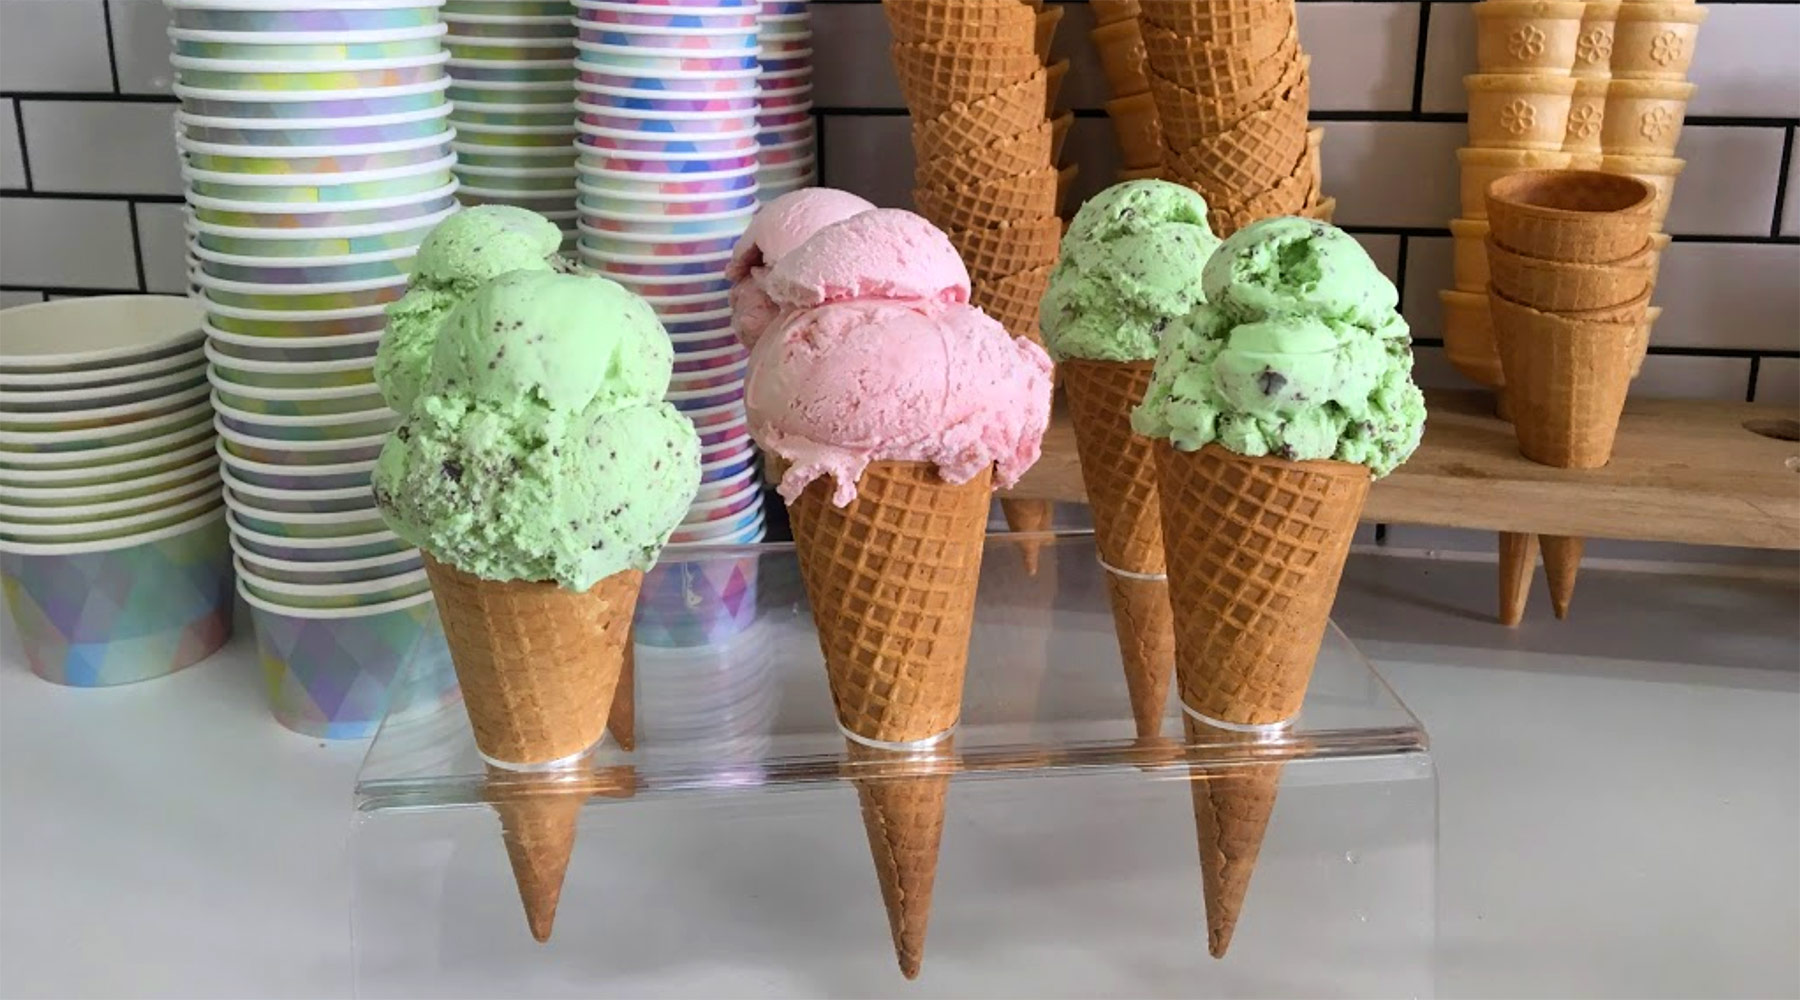 The Ice Cream Shop Queenscliff | Queenscliff Victoria Ice Cream